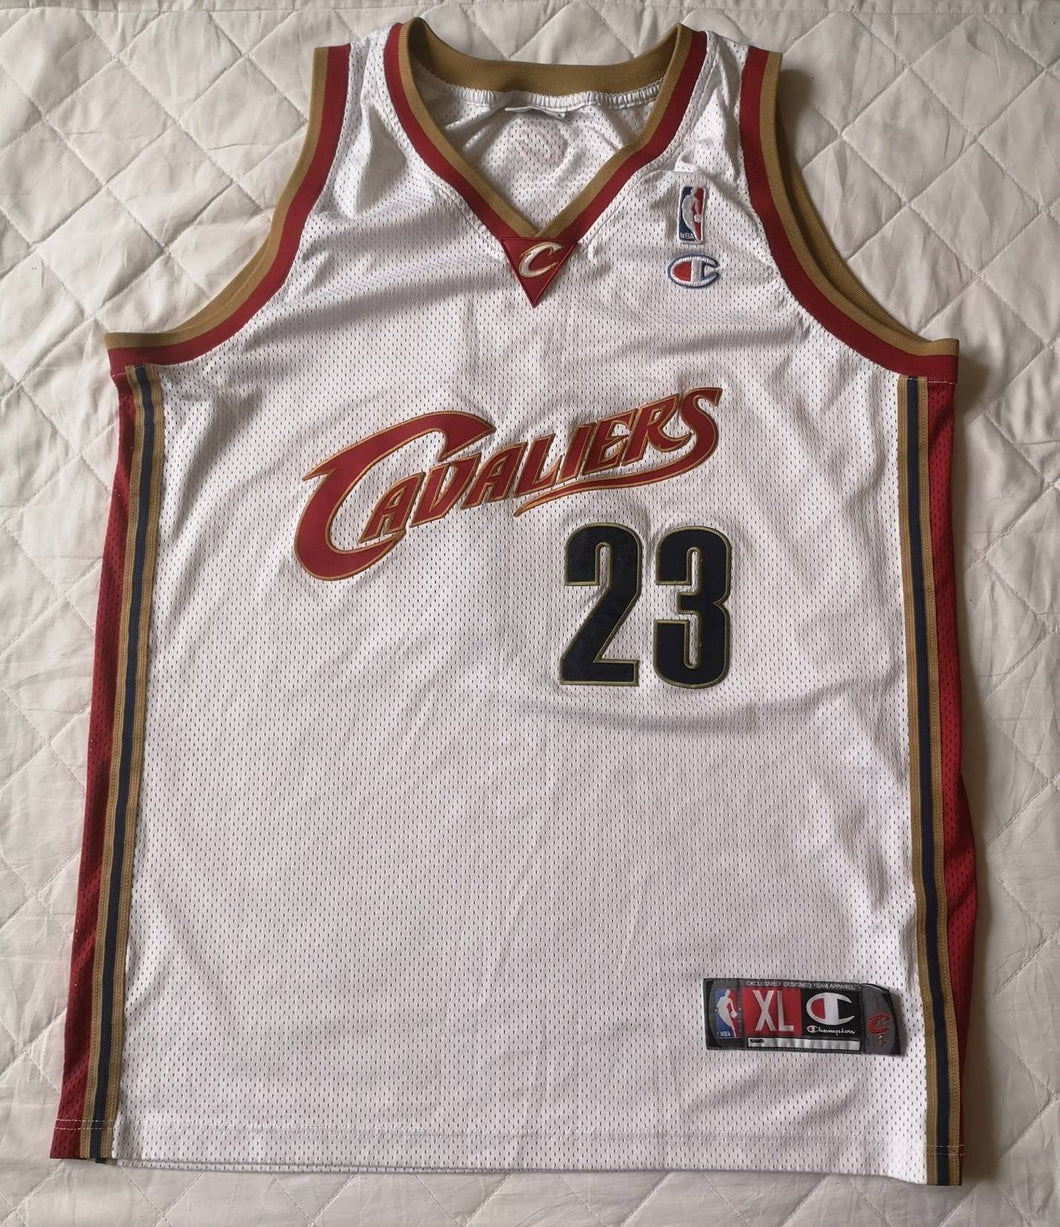 Jersey LeBron James #23 Cleveland Cavaliers NBA Champion Vintage